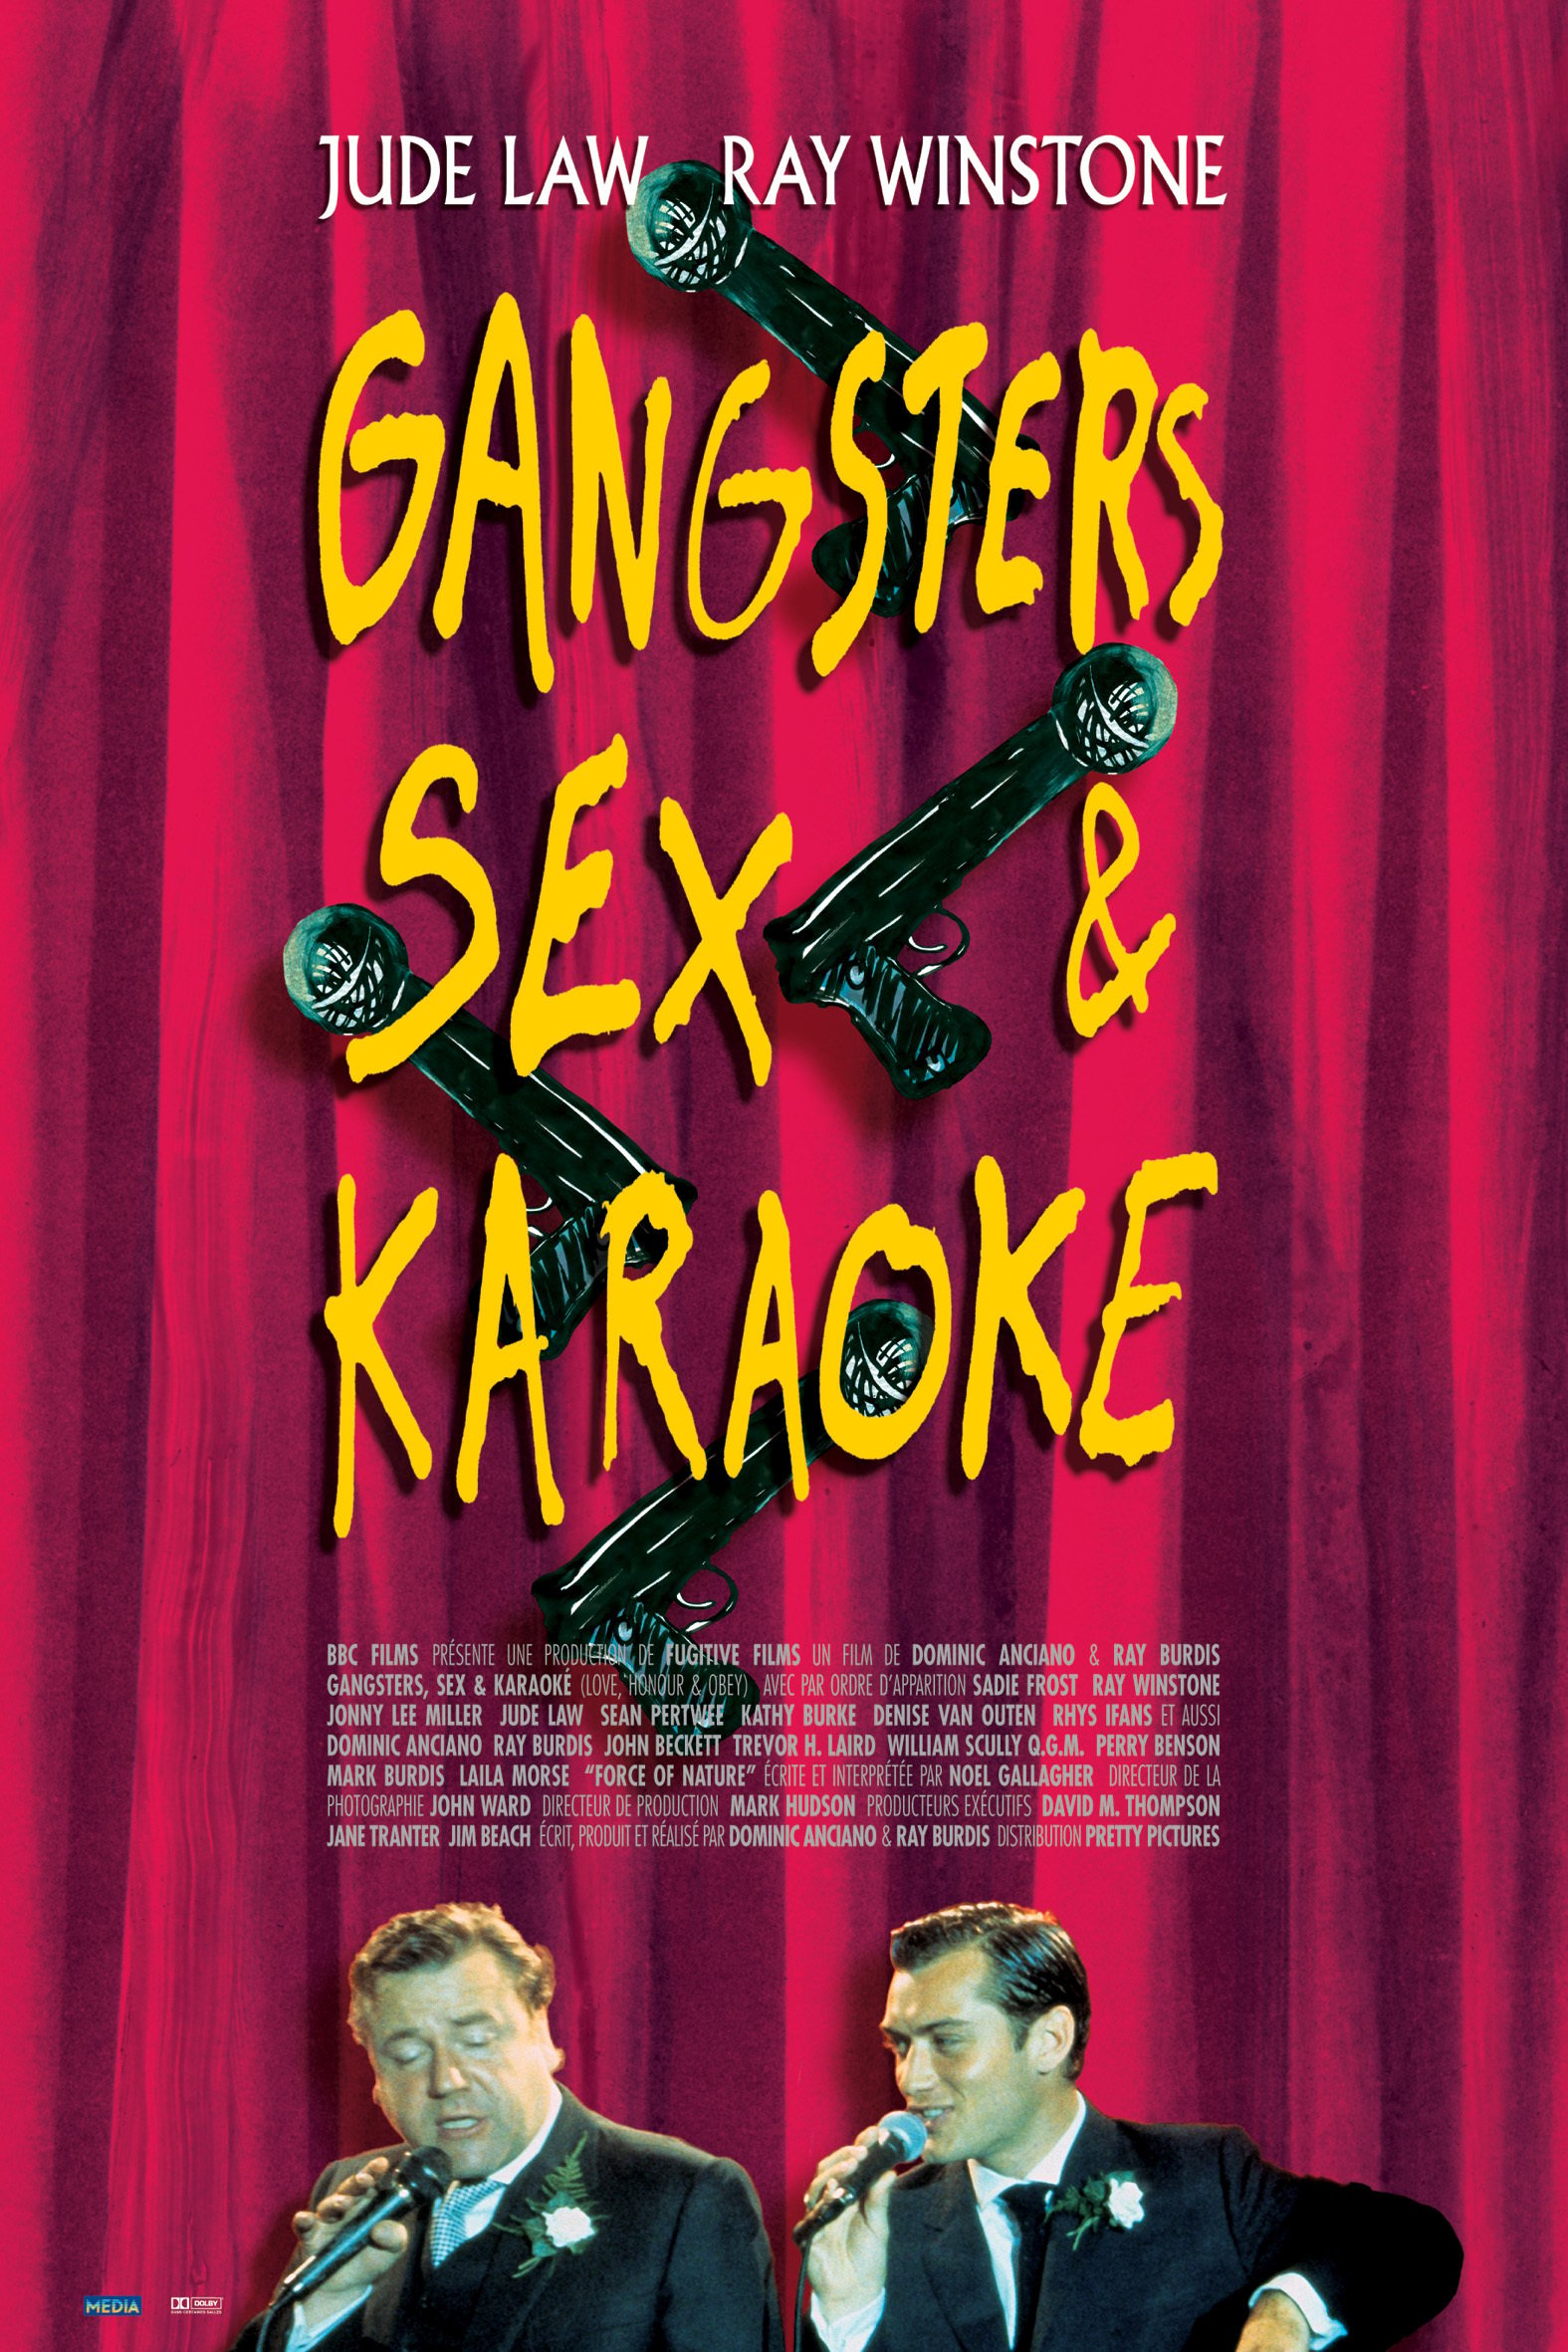 Gangsters, Sex & Karaoke